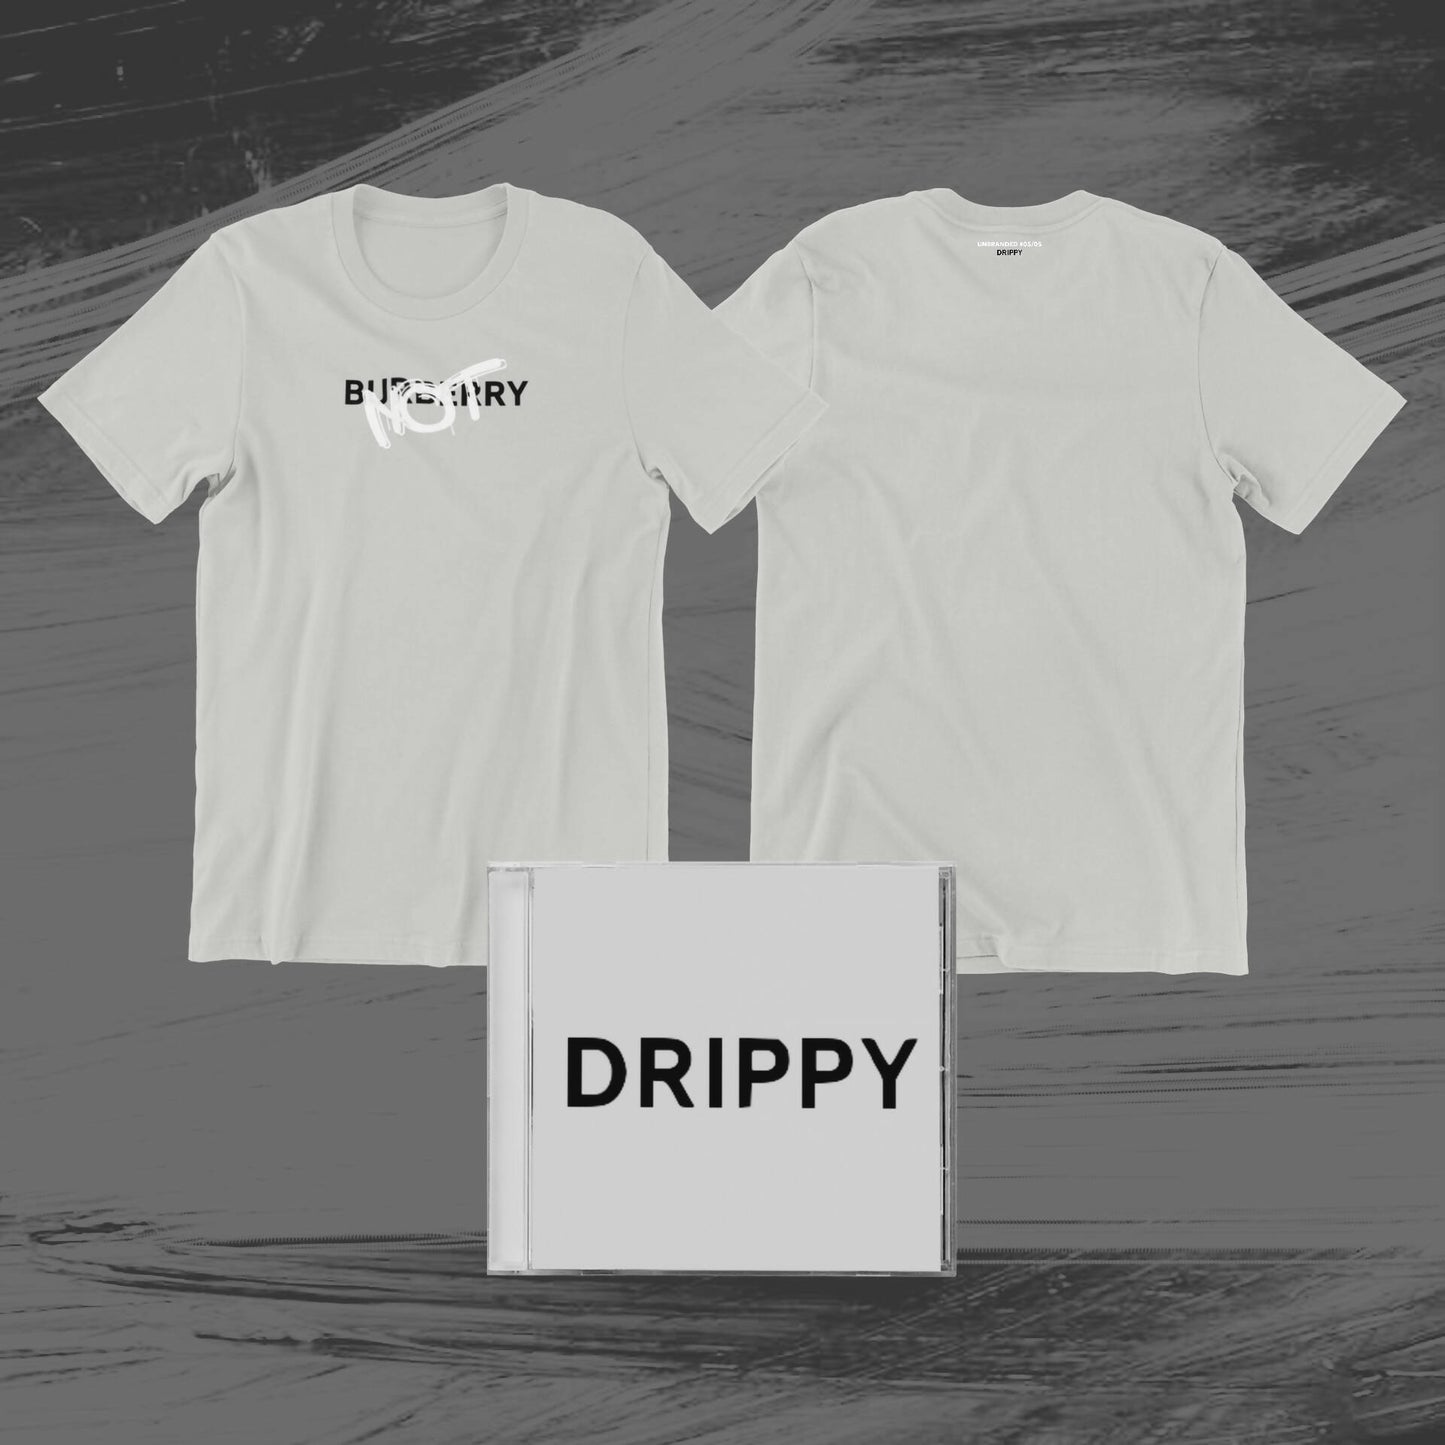 Anti-Burberry T-shirt Design